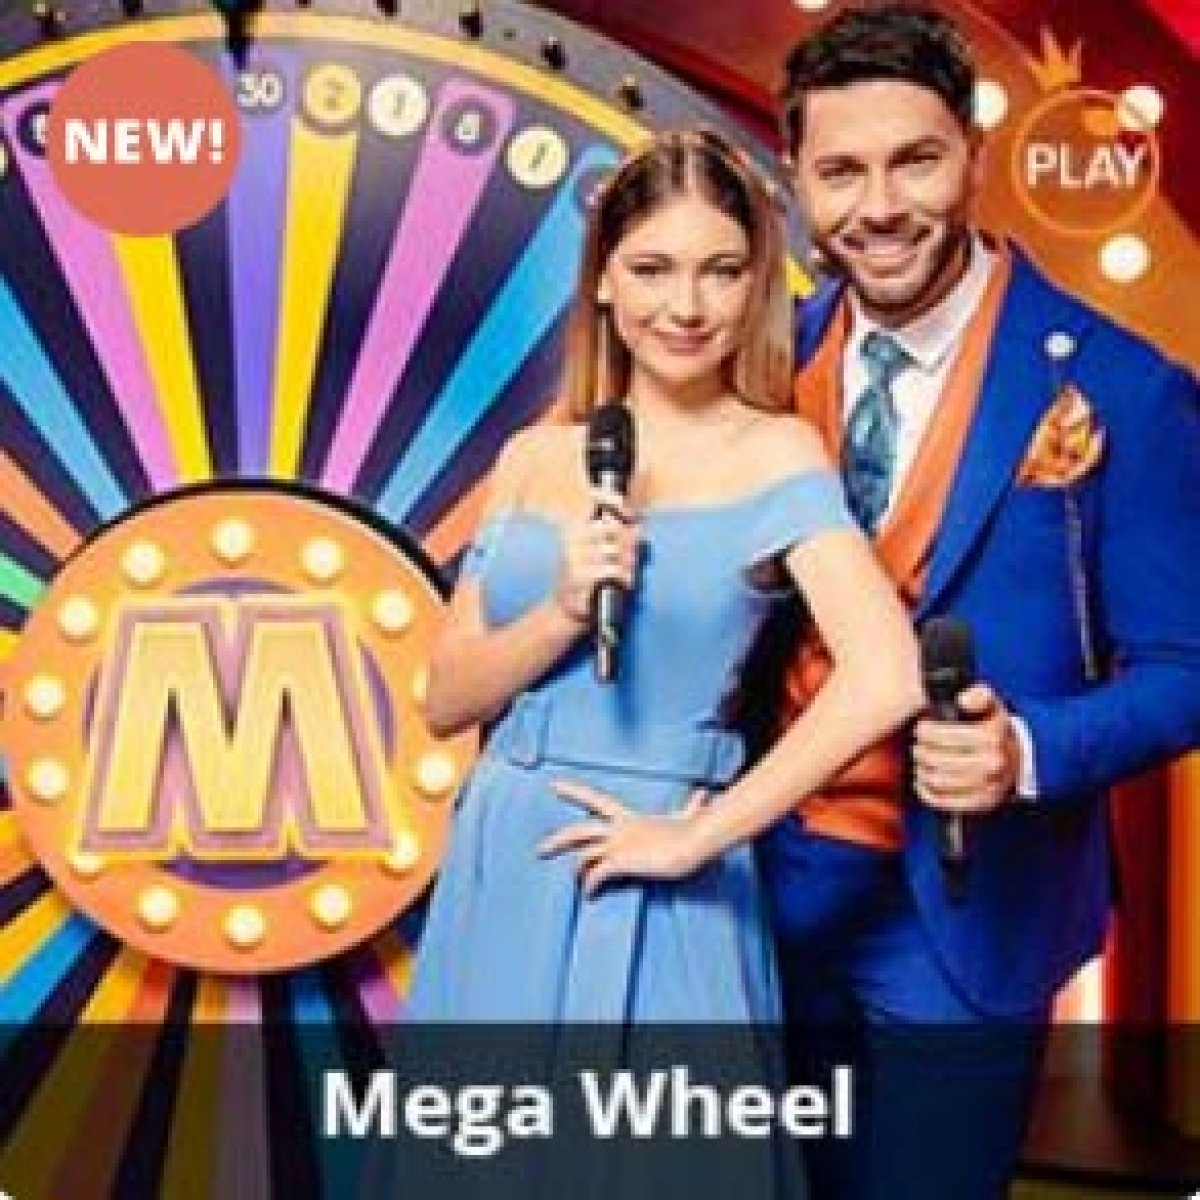 Mega wheel